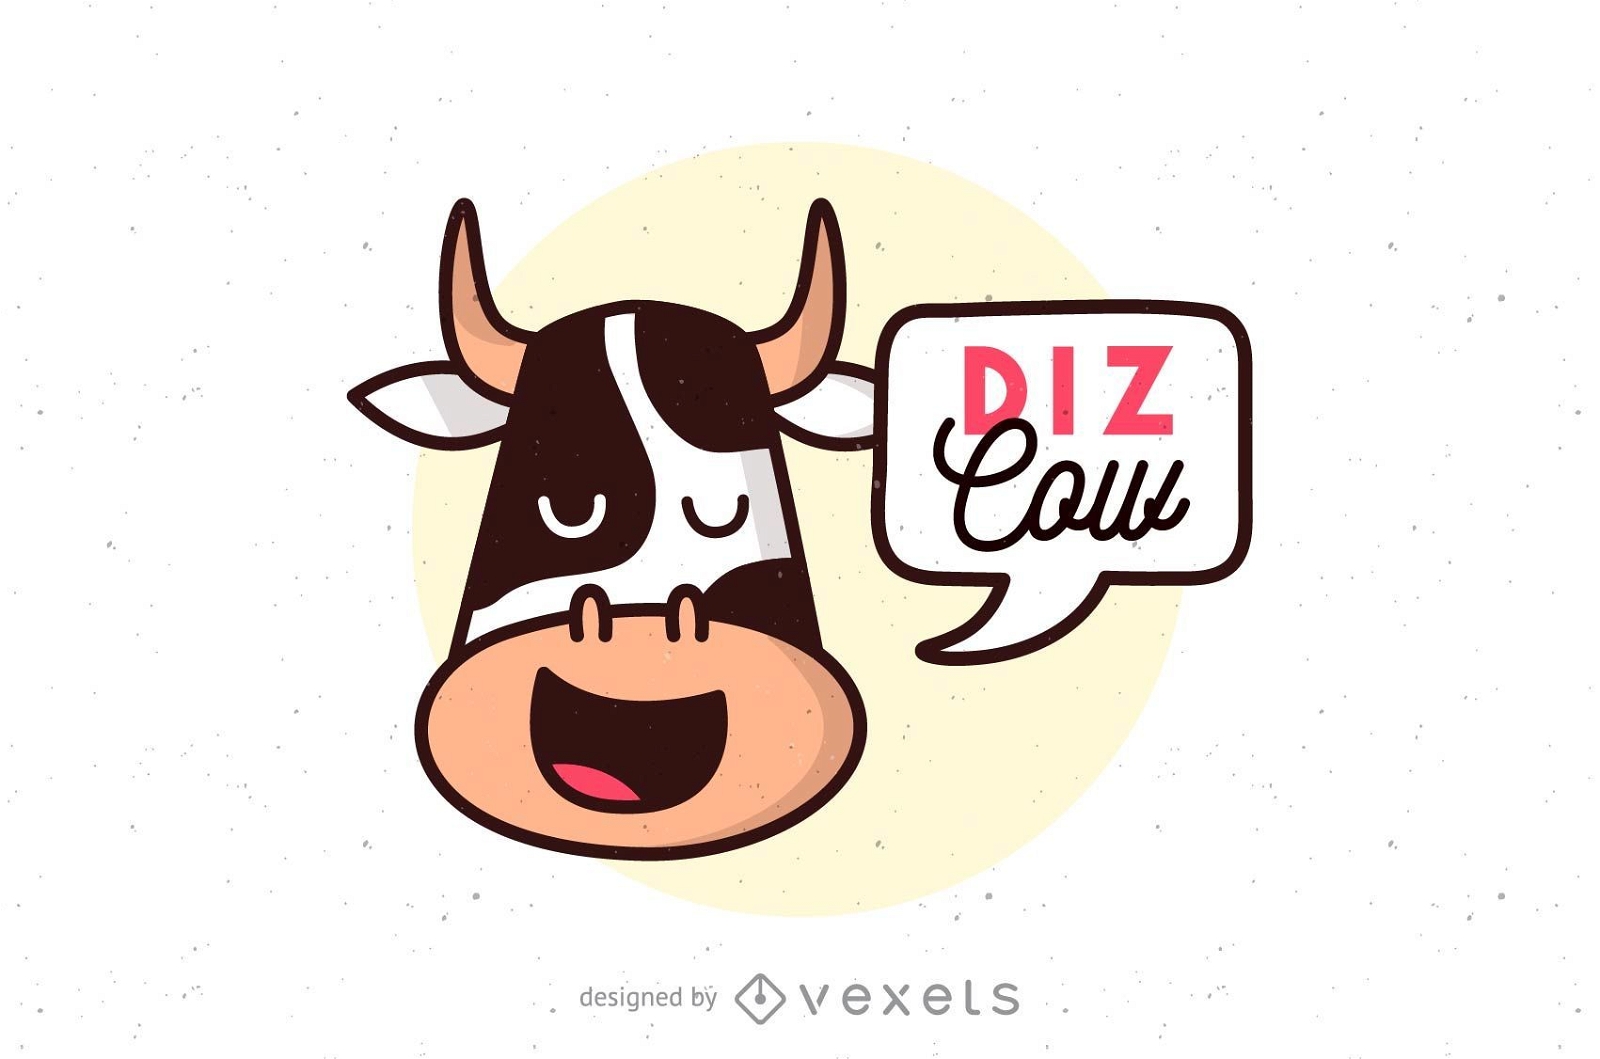 Modelo de logotipo Diz cow